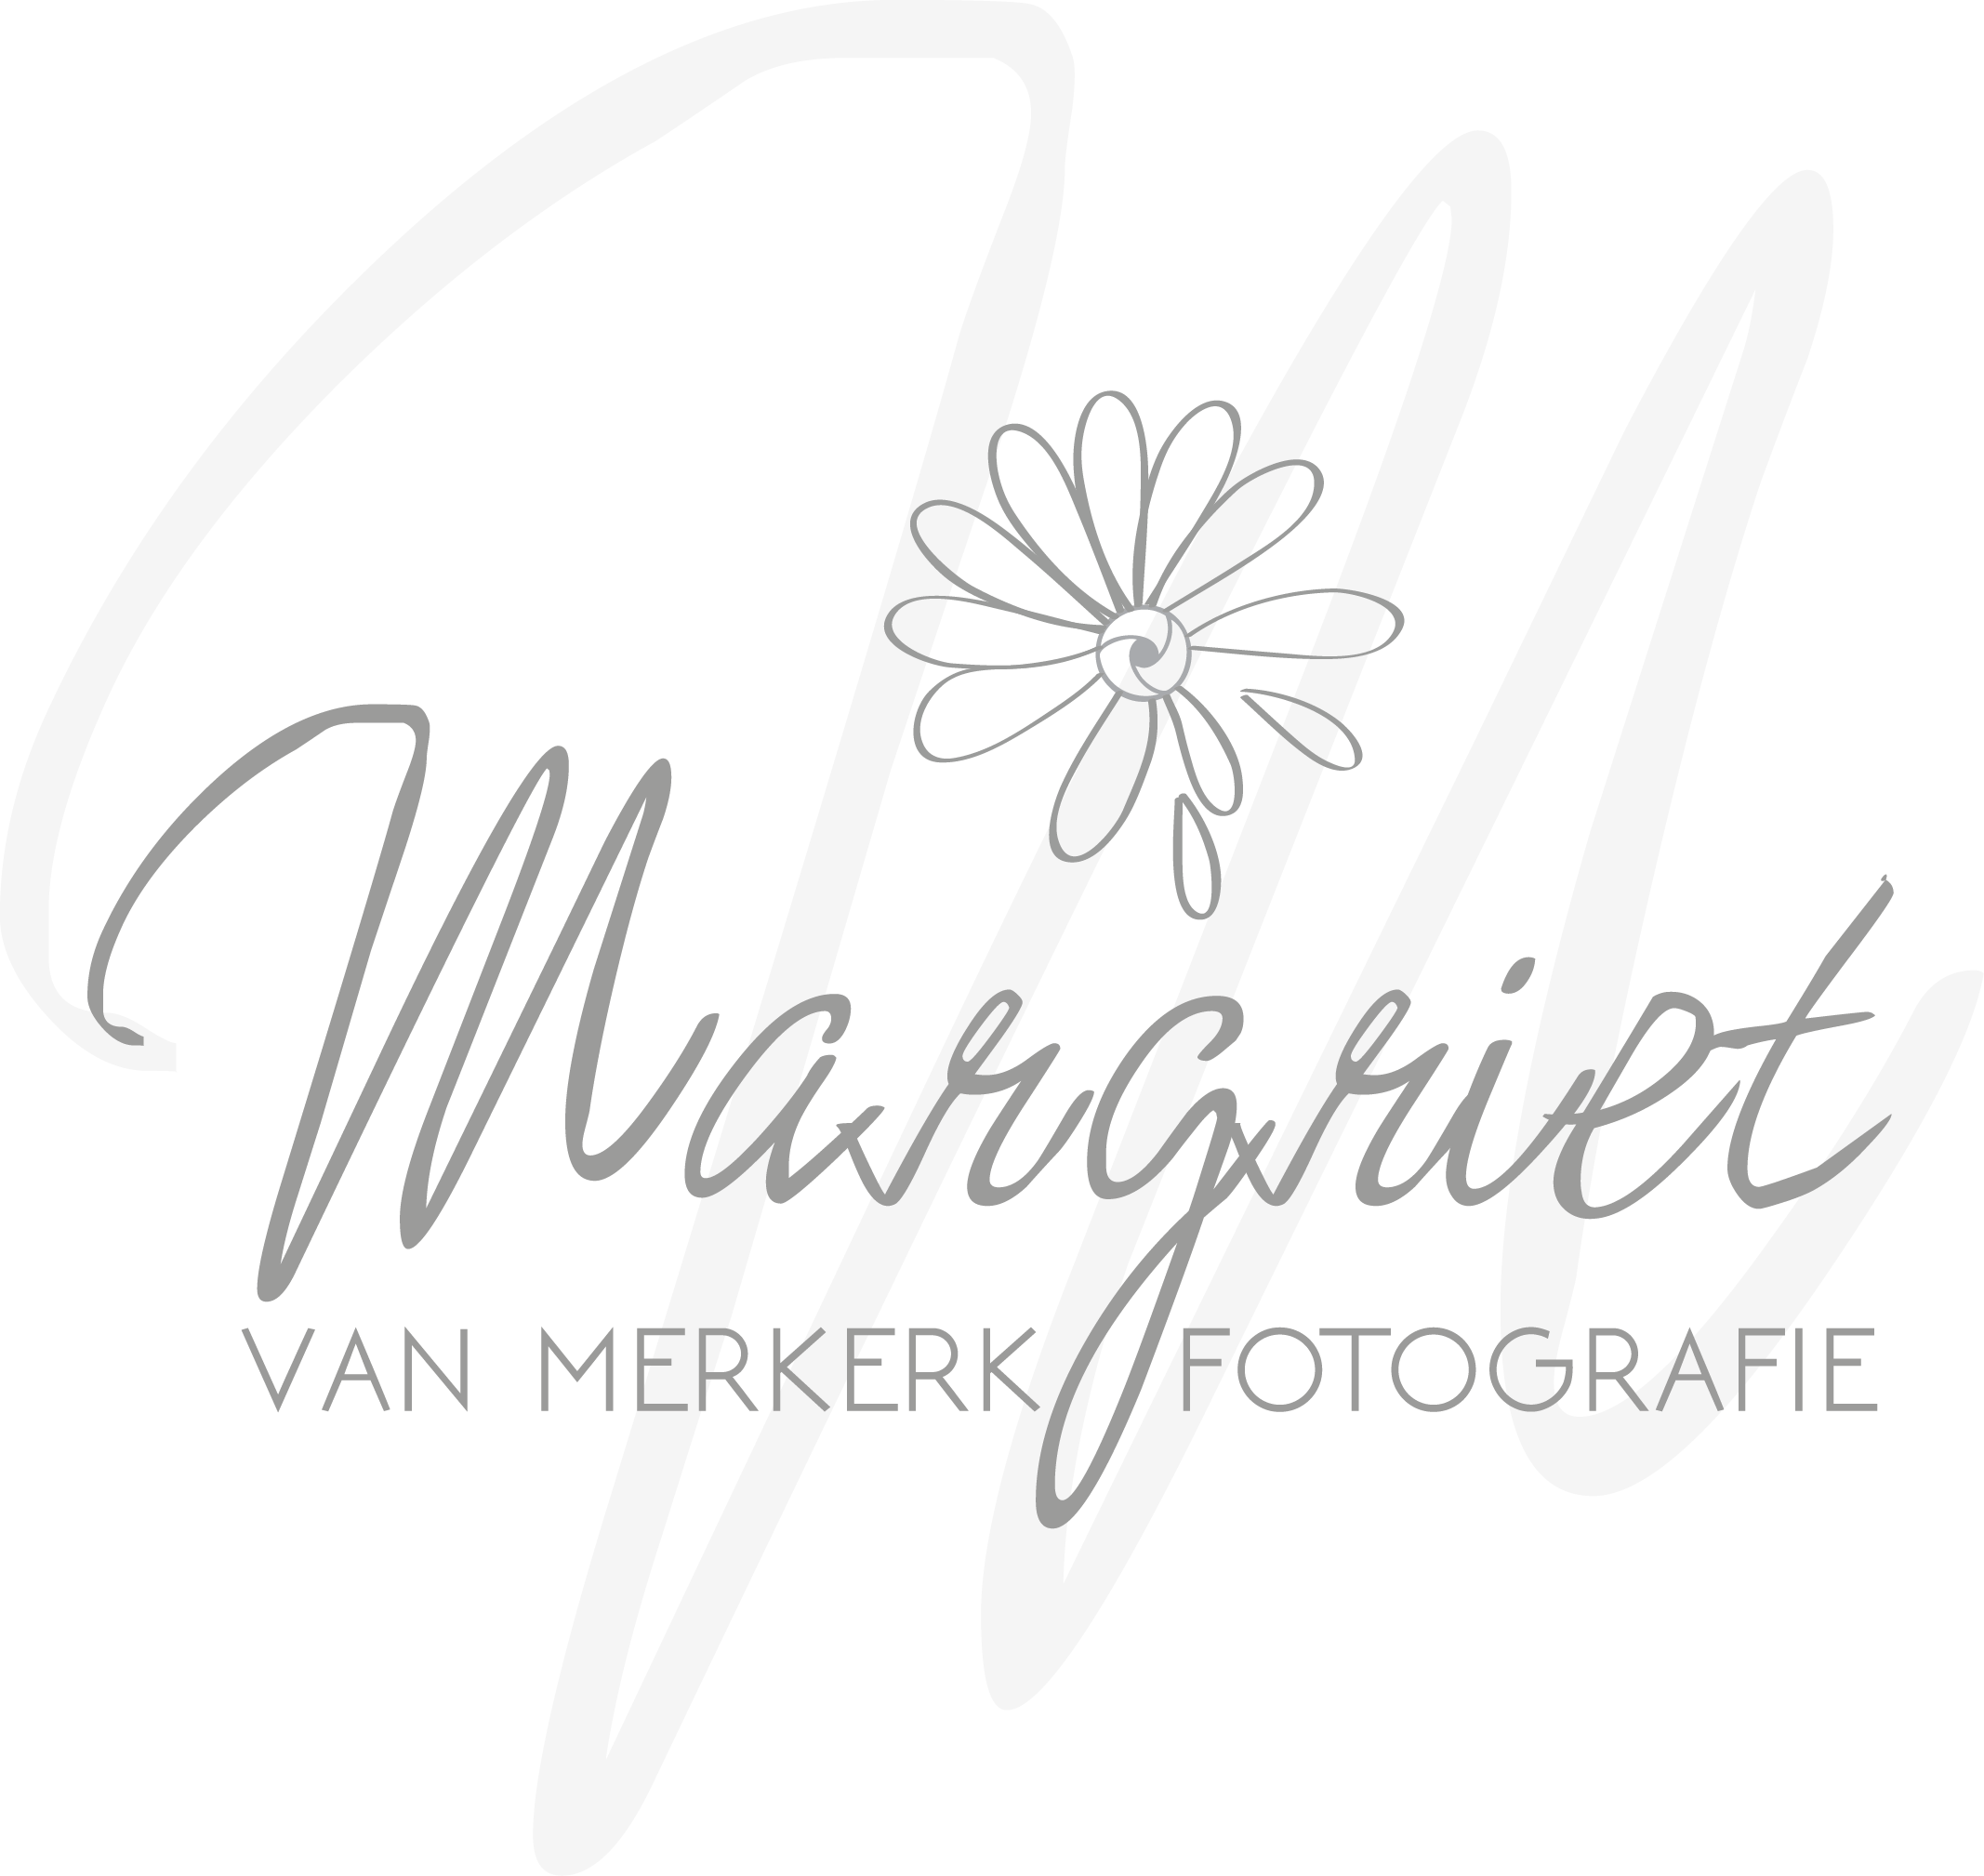 Margriet van Merkerk fotografie